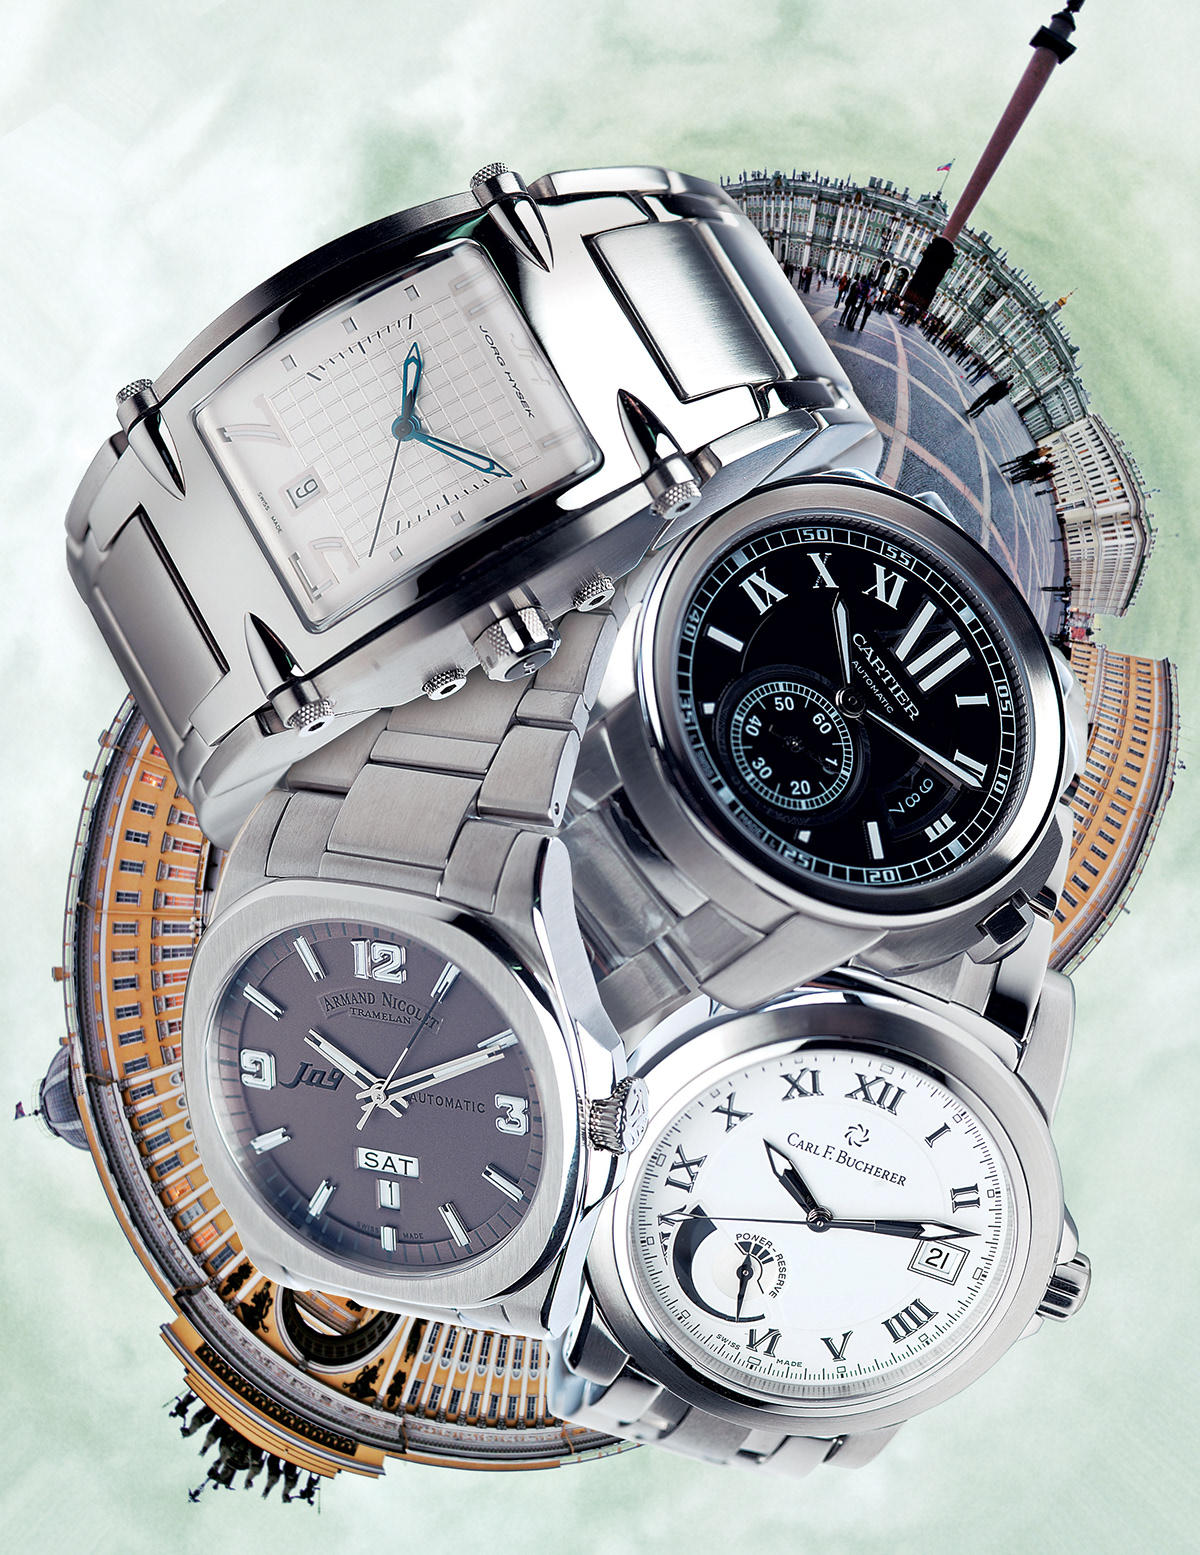 edox jacques lemans Cartier jorg hysek armand nicolet Carl F. Bucherer Watches clocks Mechanicals Chronograph tashkent st. pieterburg